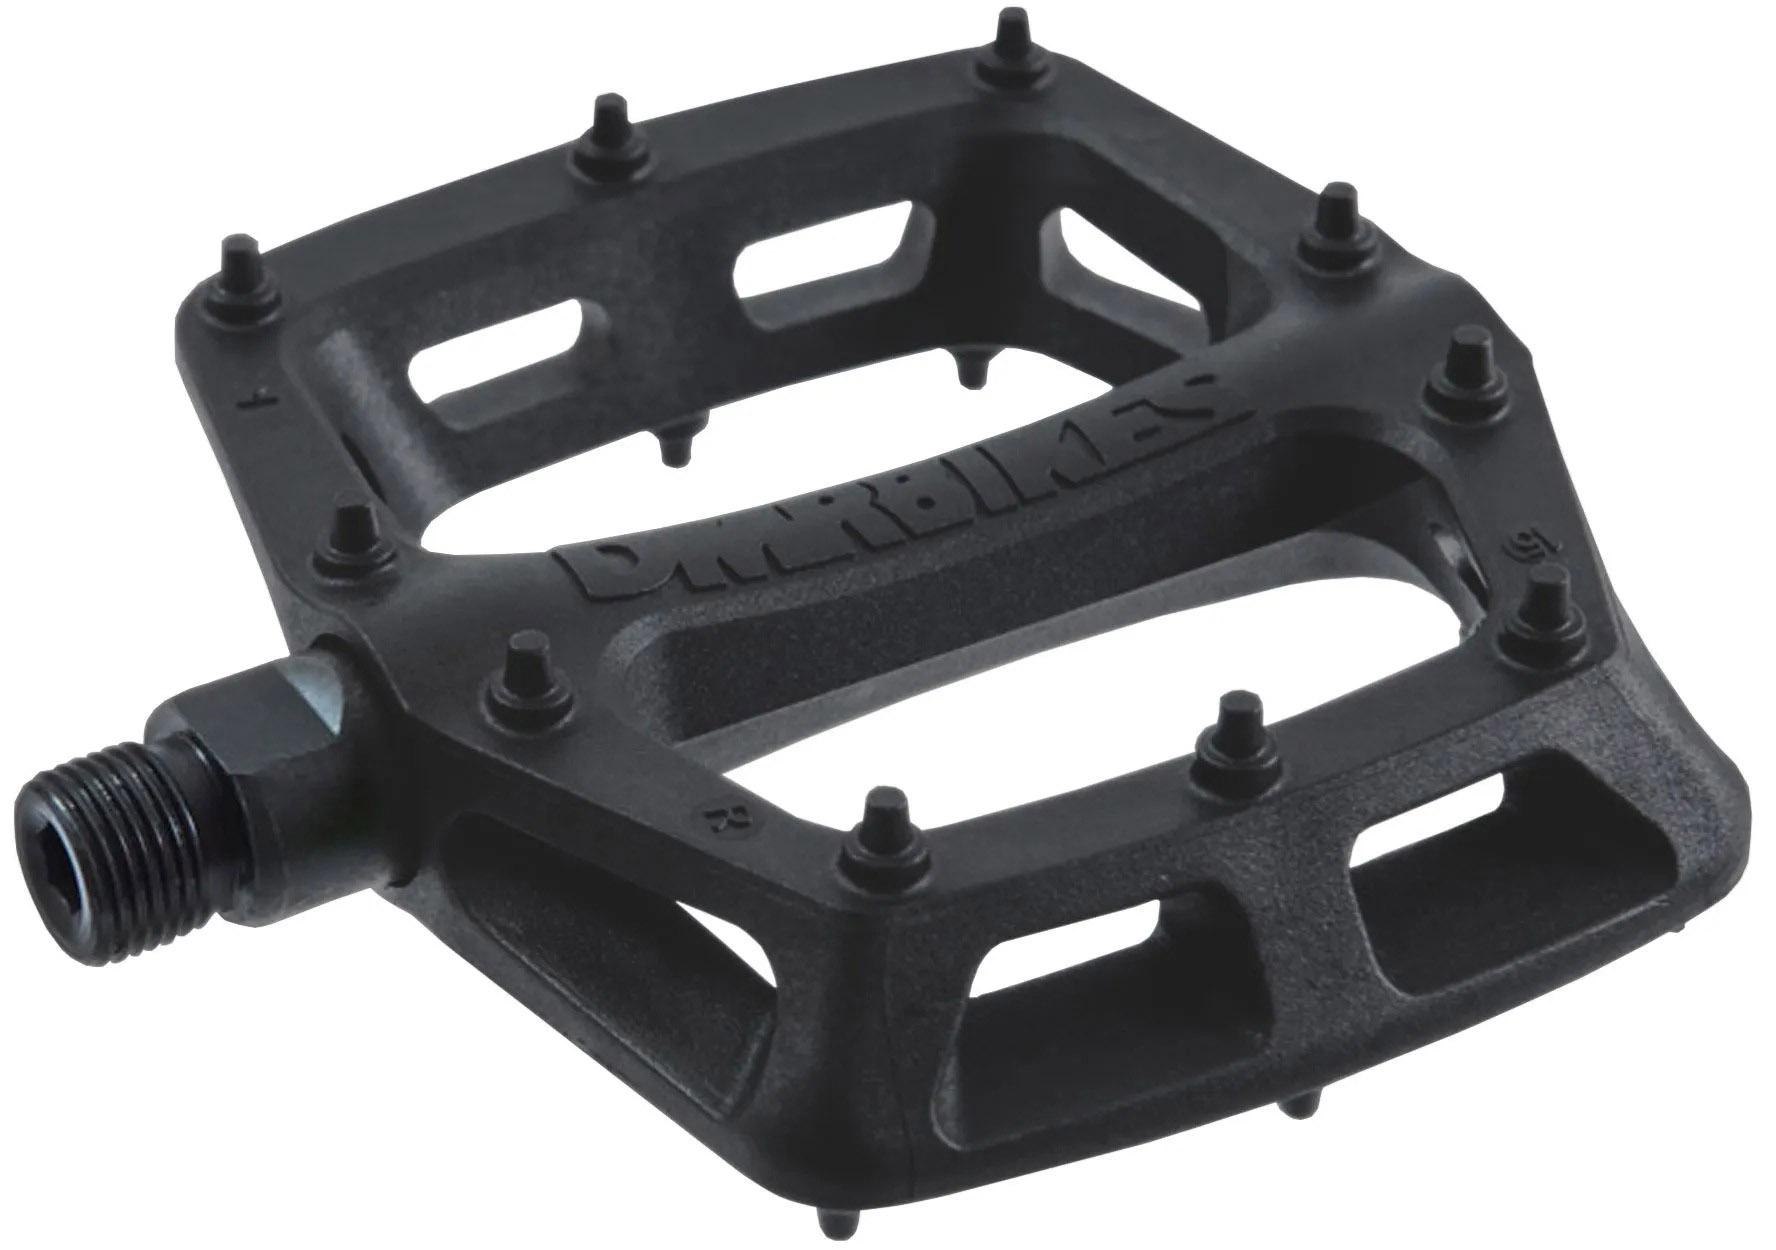 Dmr V6 Plastic Flat Pedals - Black